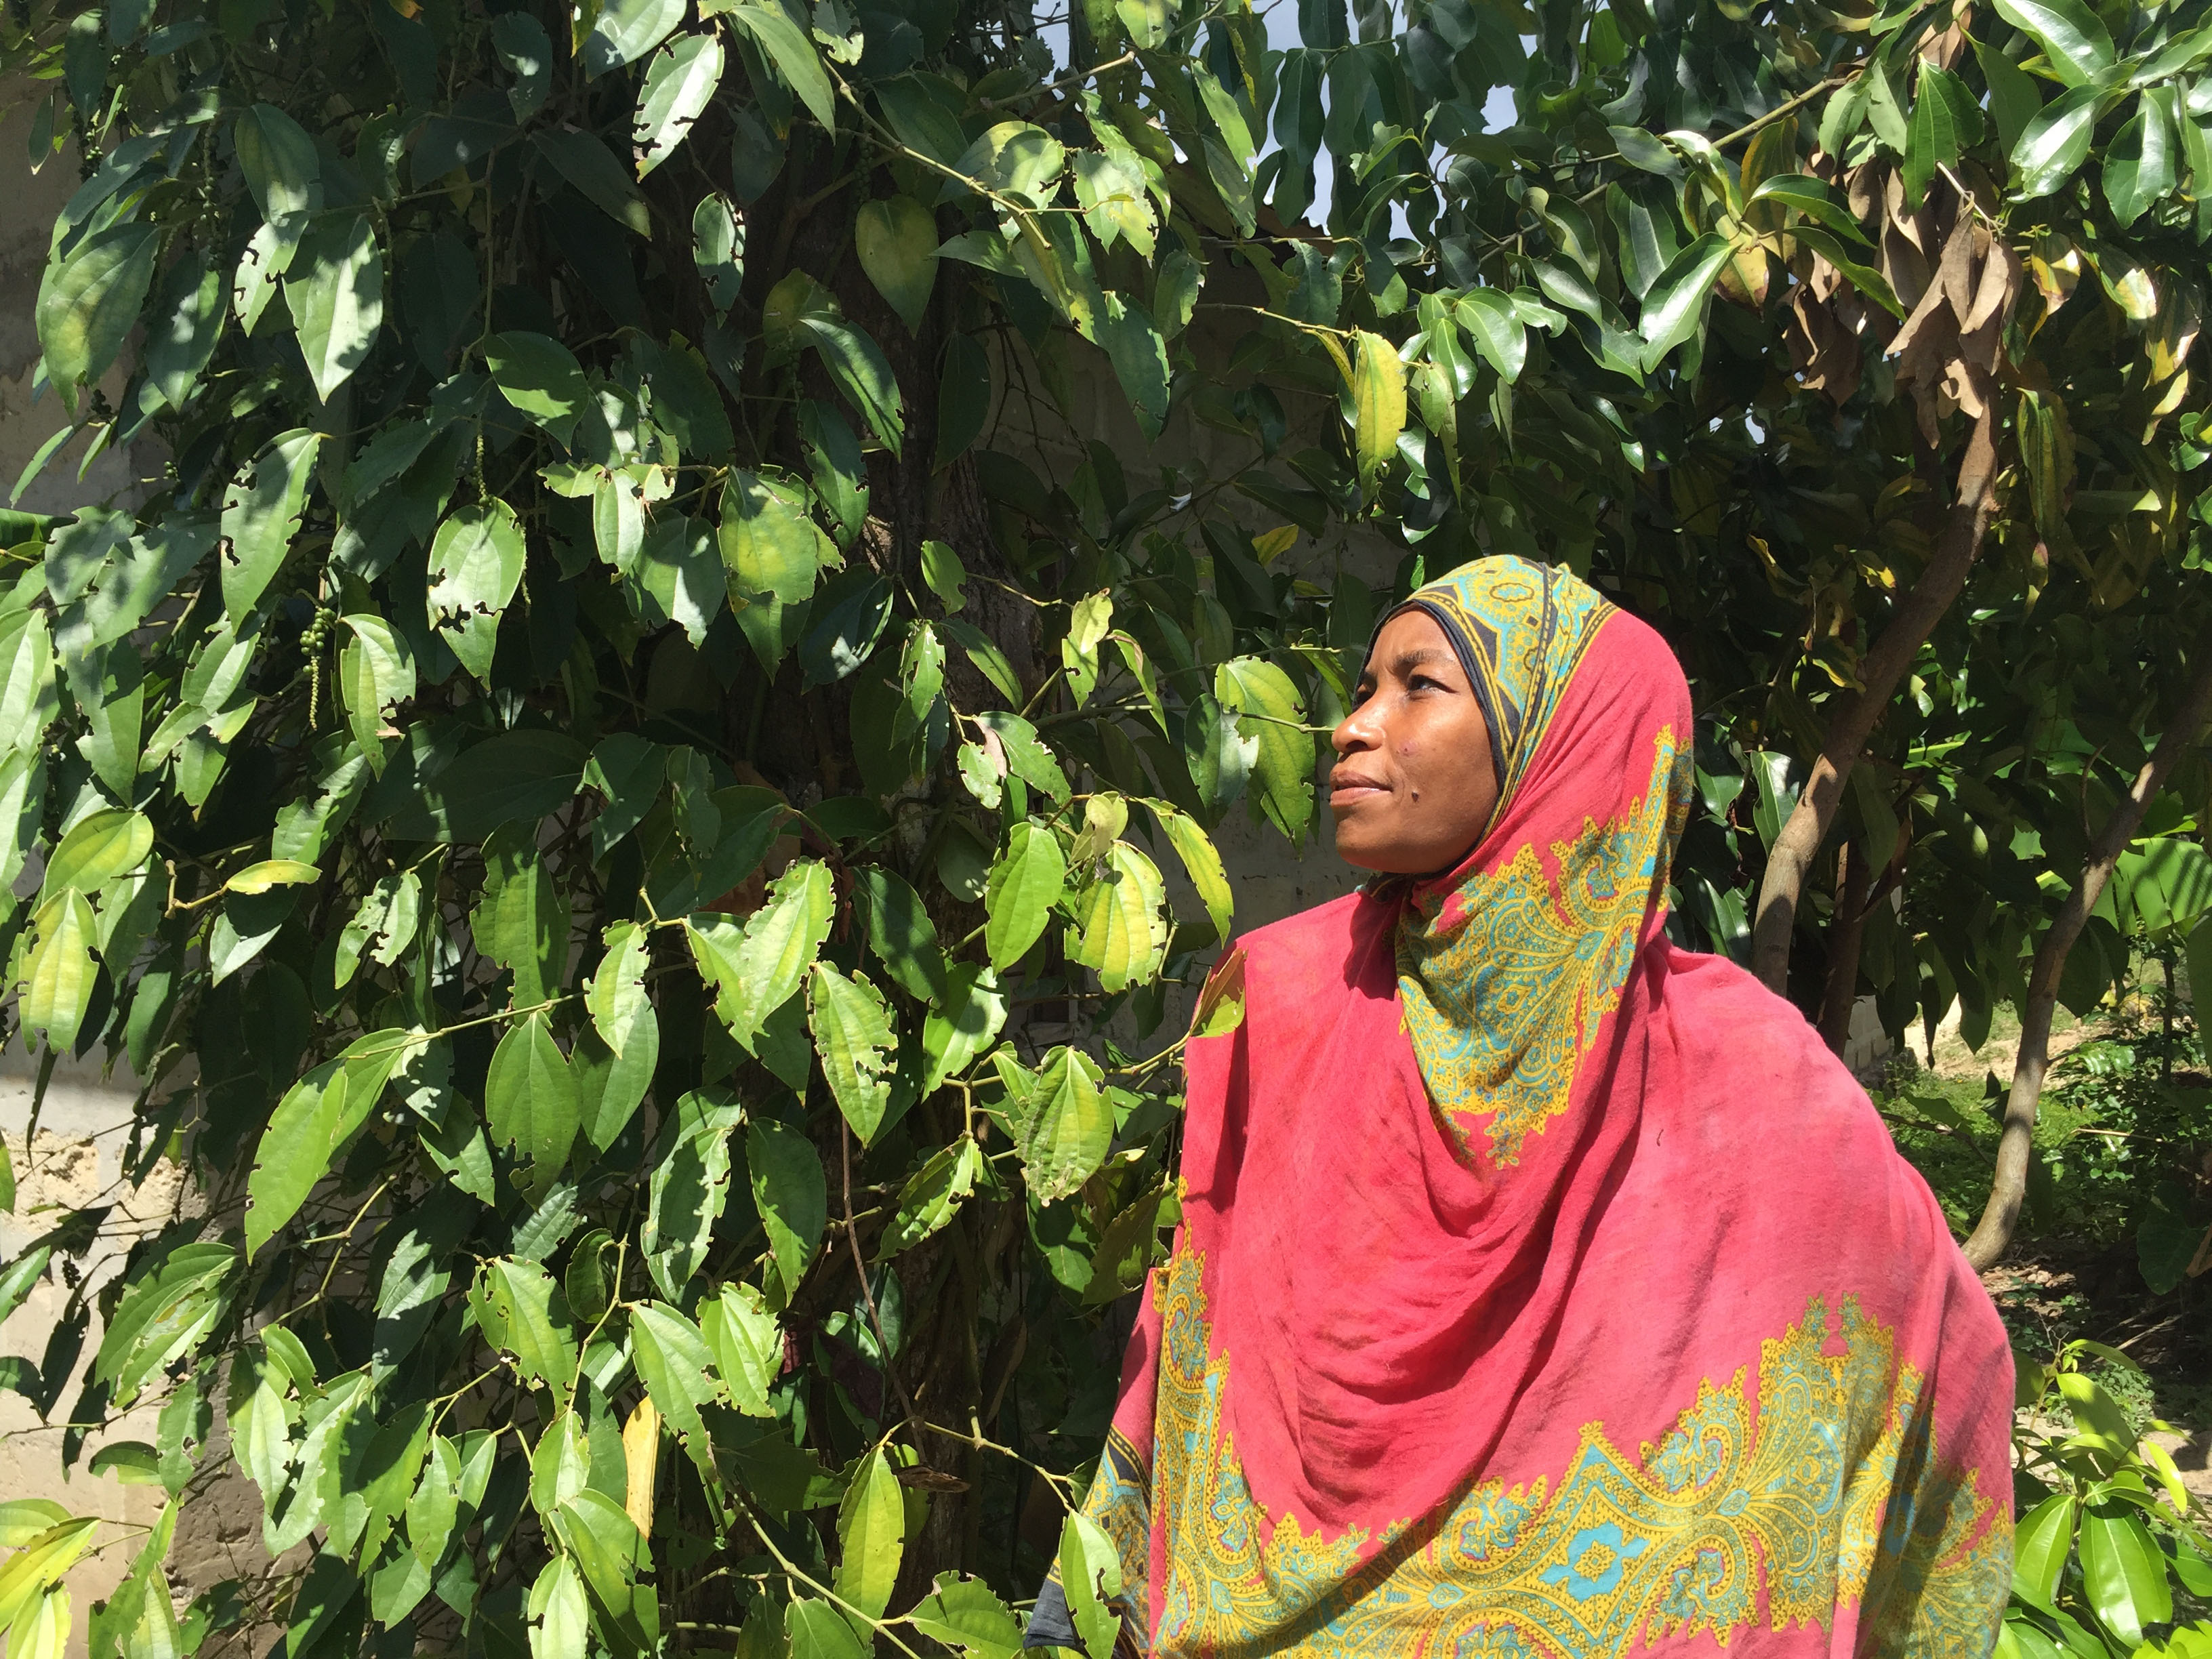 Salma Zaharan from Kiongoni Village with black pepper vines in her garden.